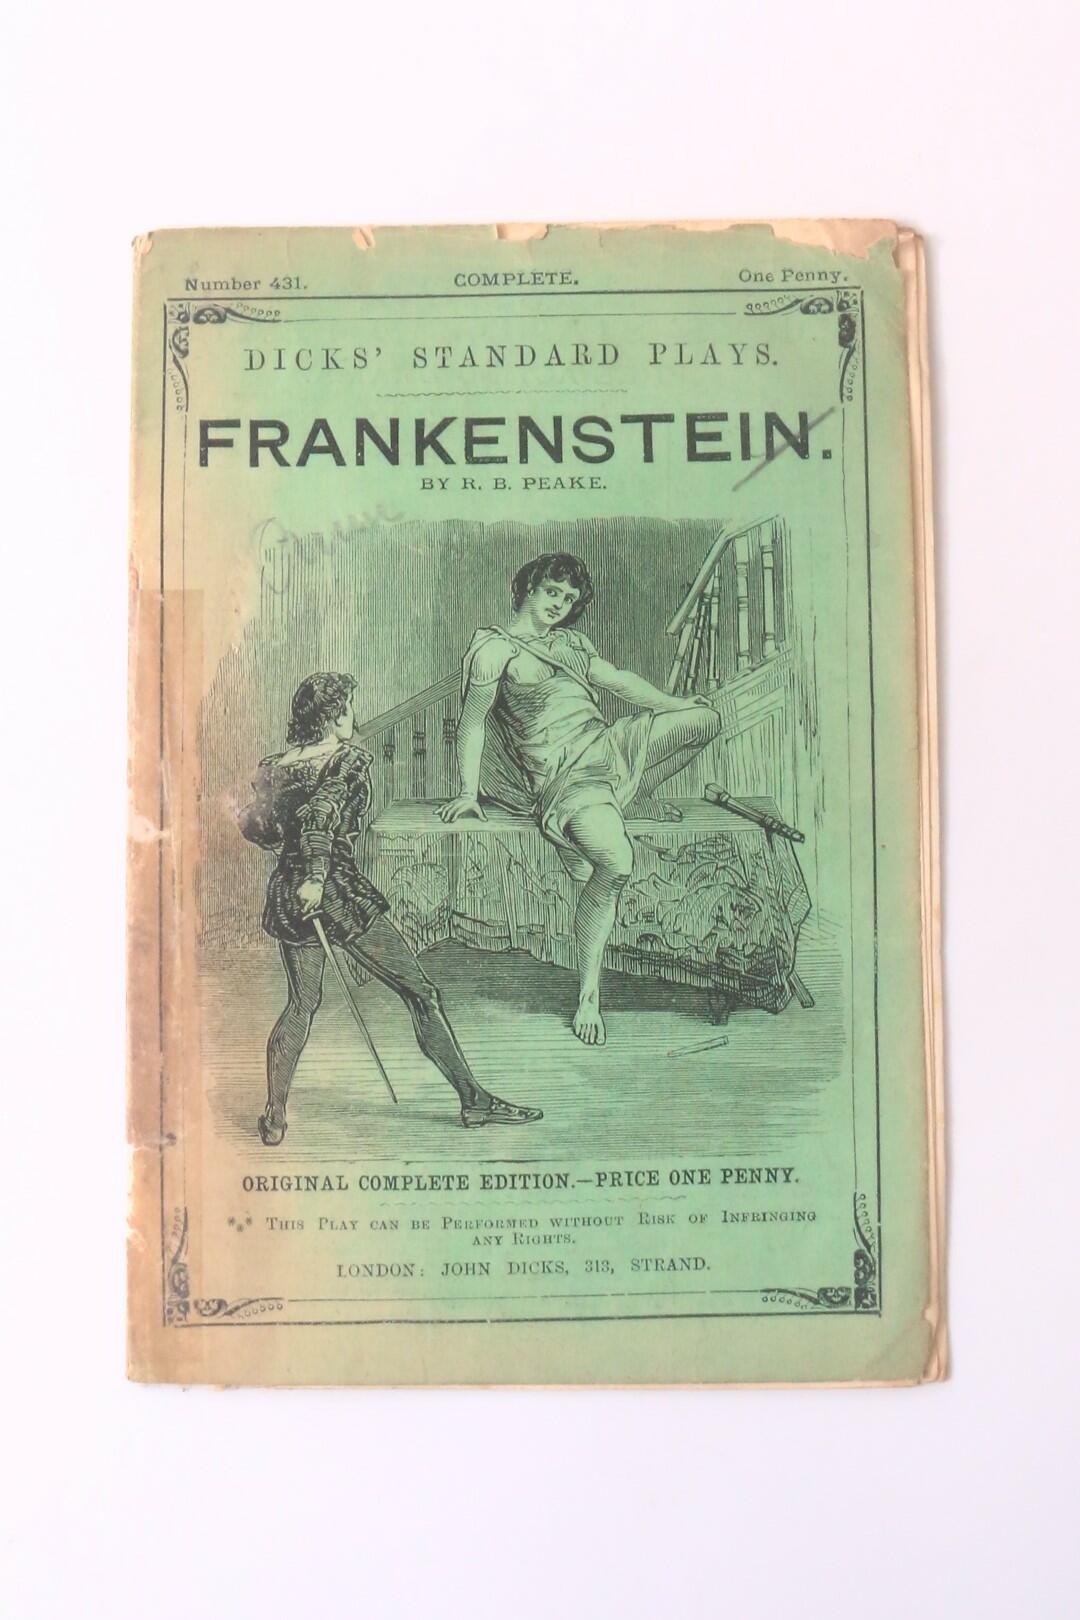 Mary Shelley and R.B. Peake - Frankenstein [in] Dicks' Standard Plays - John Dicks, n.d. [c1883?], First Edition.